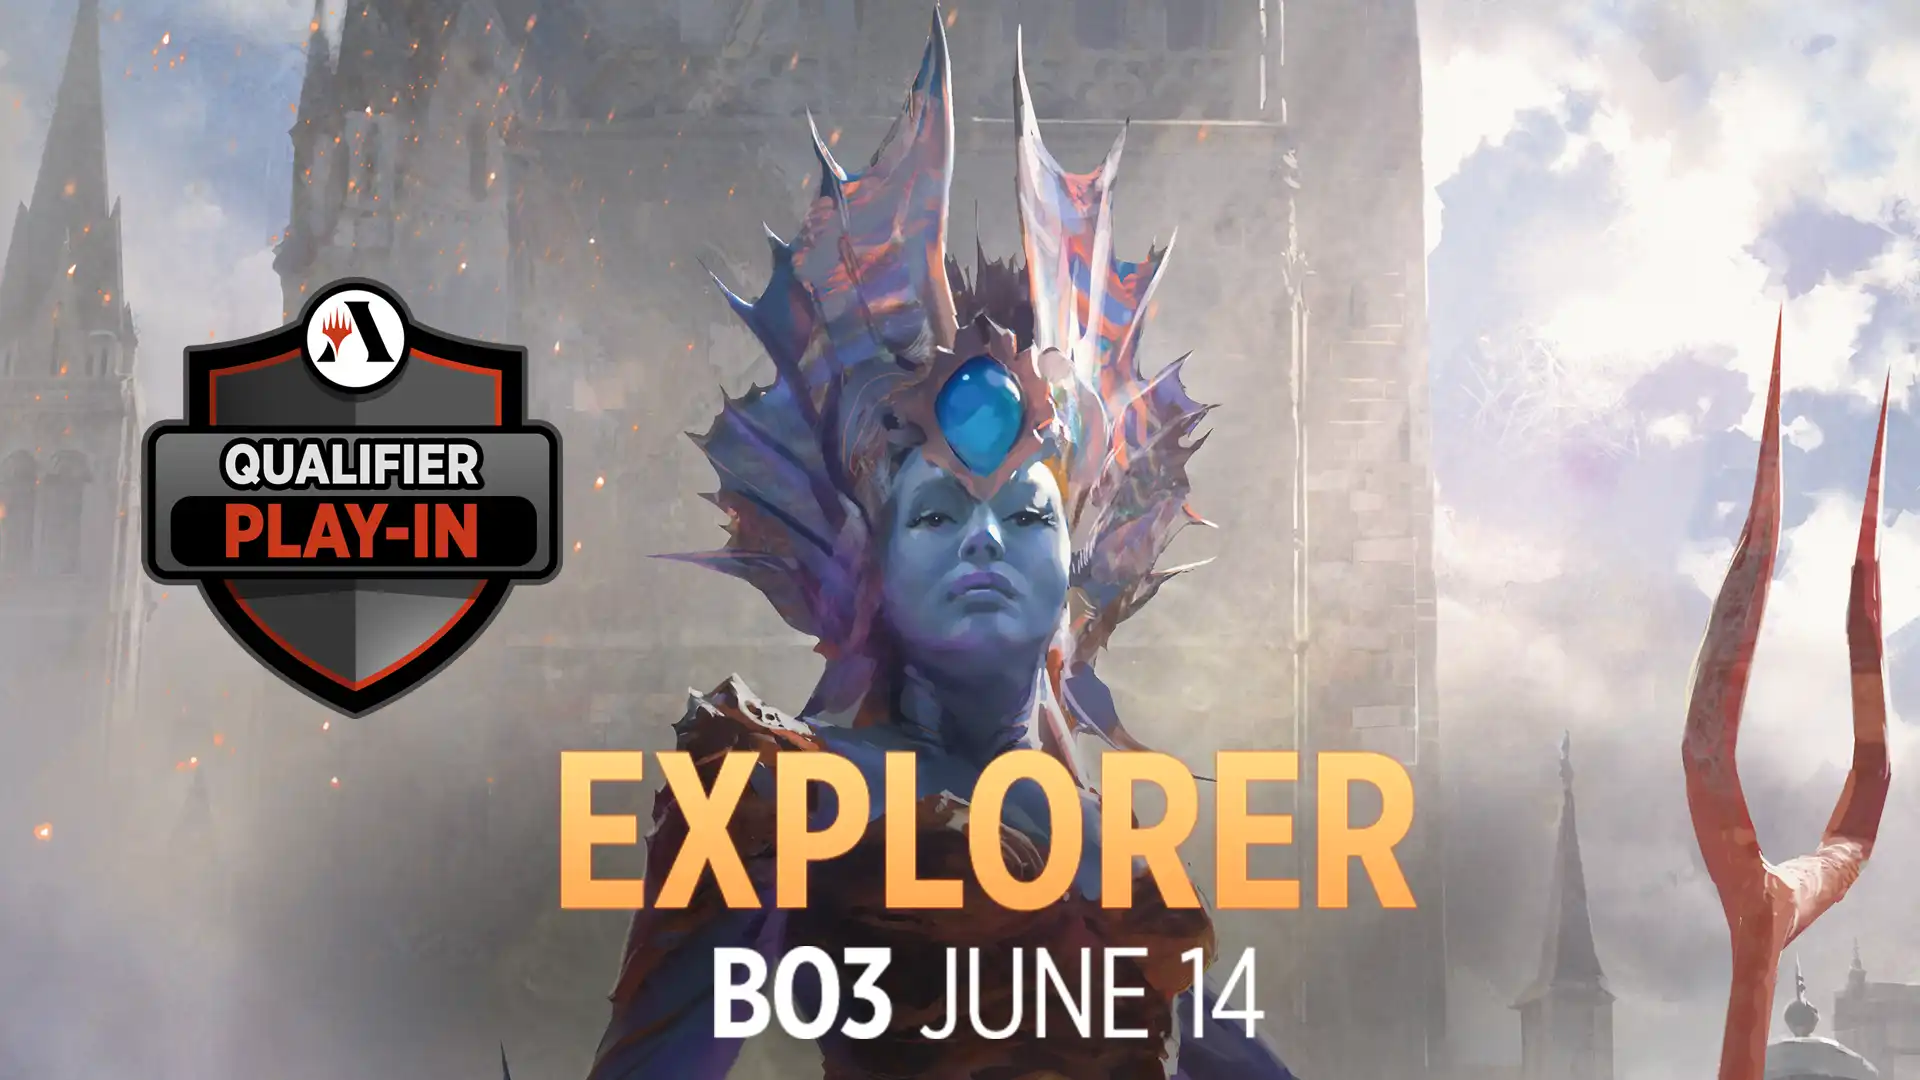 Qualifier Play-In Best-of-Three, June 14, Explorer format